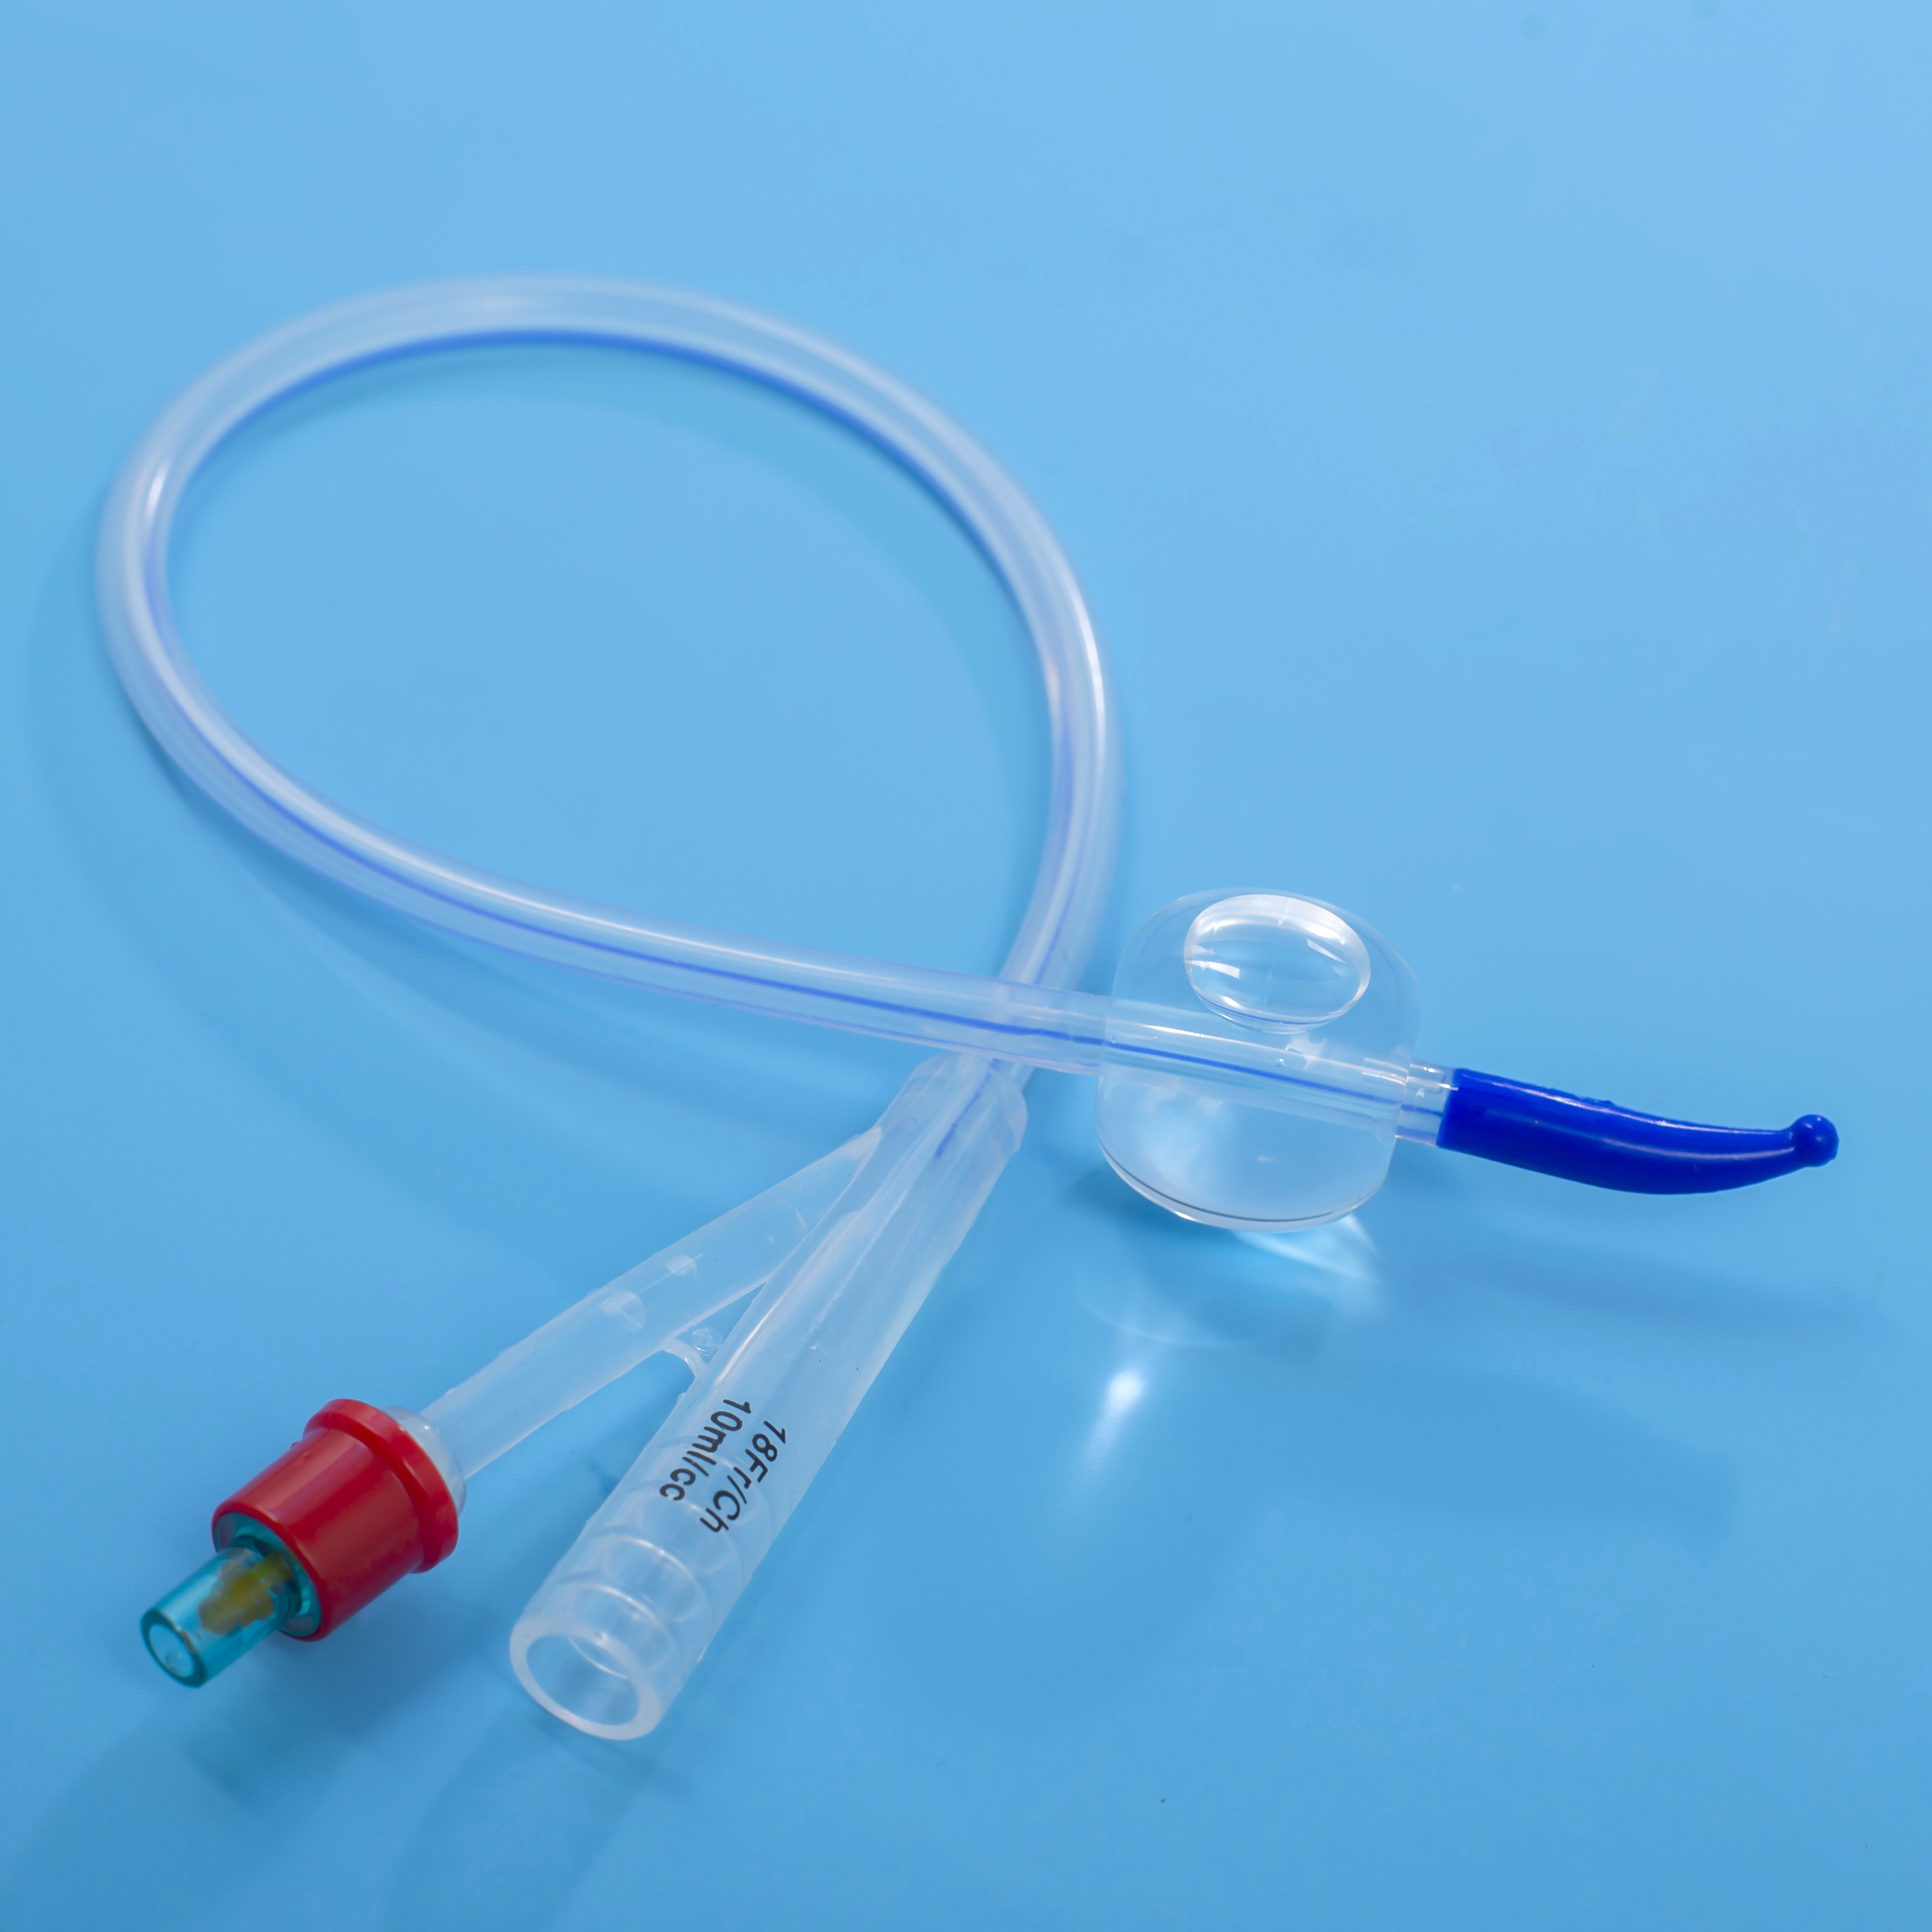 2 Way Silicone Foley Catheter nga adunay Unibal Integral Balloon Technology Integrated Flat Balloon Tiemann Tipped Urethral Use Men